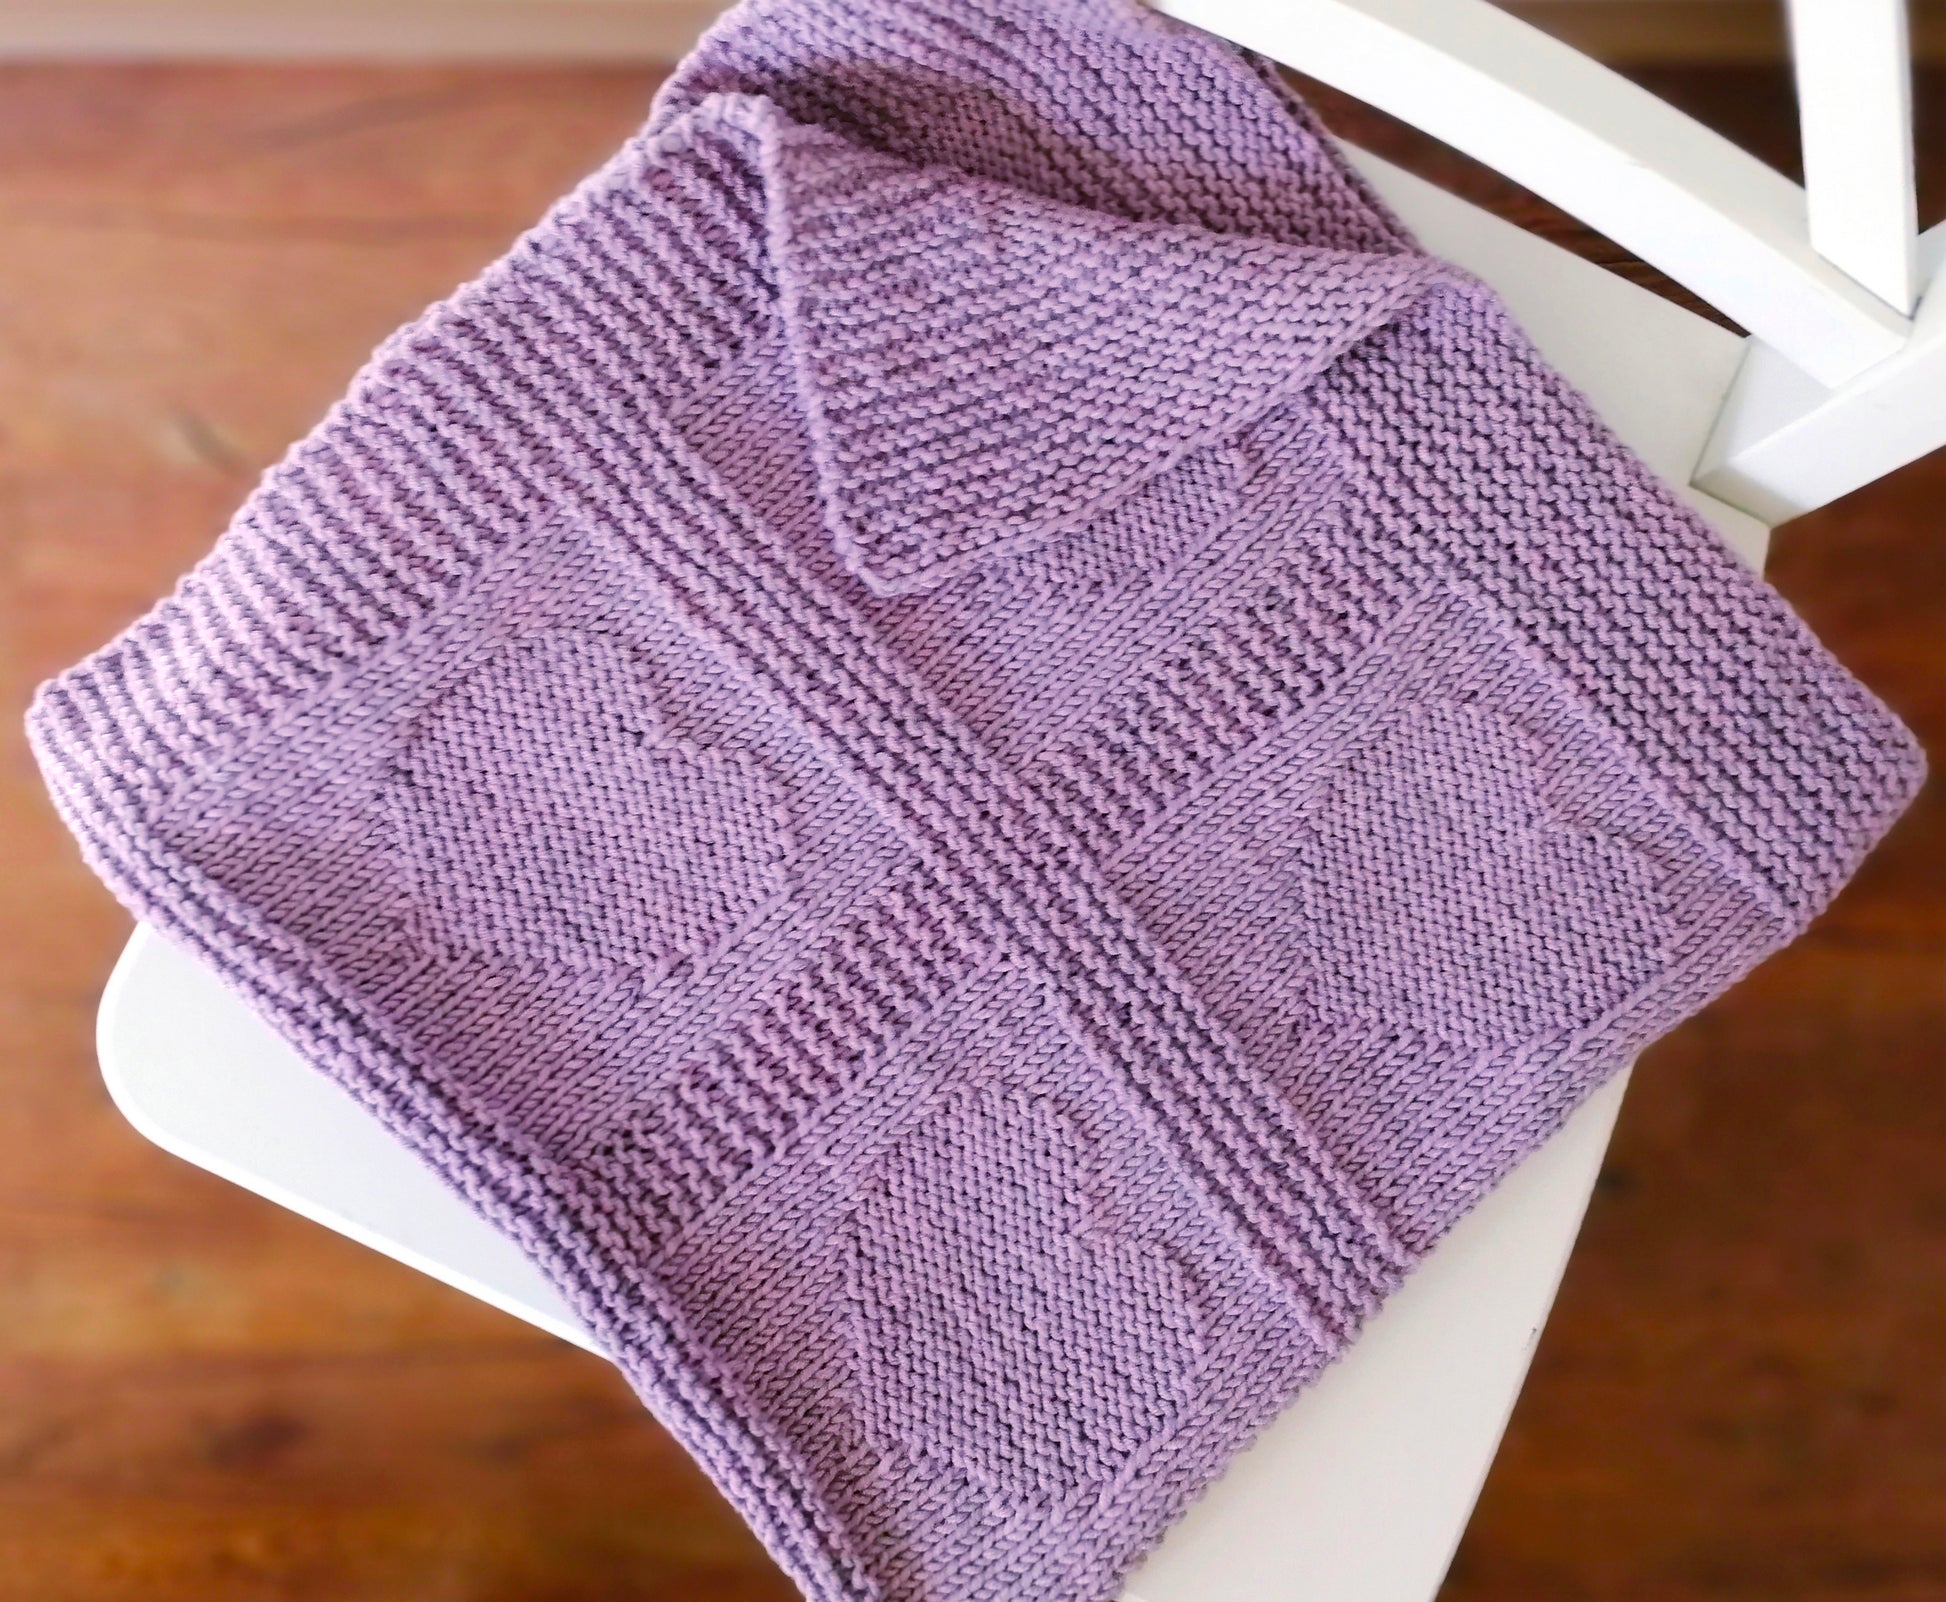 Purple superwash merino wool yarn hand-knitted baby blanket in Hearts knitting pattern